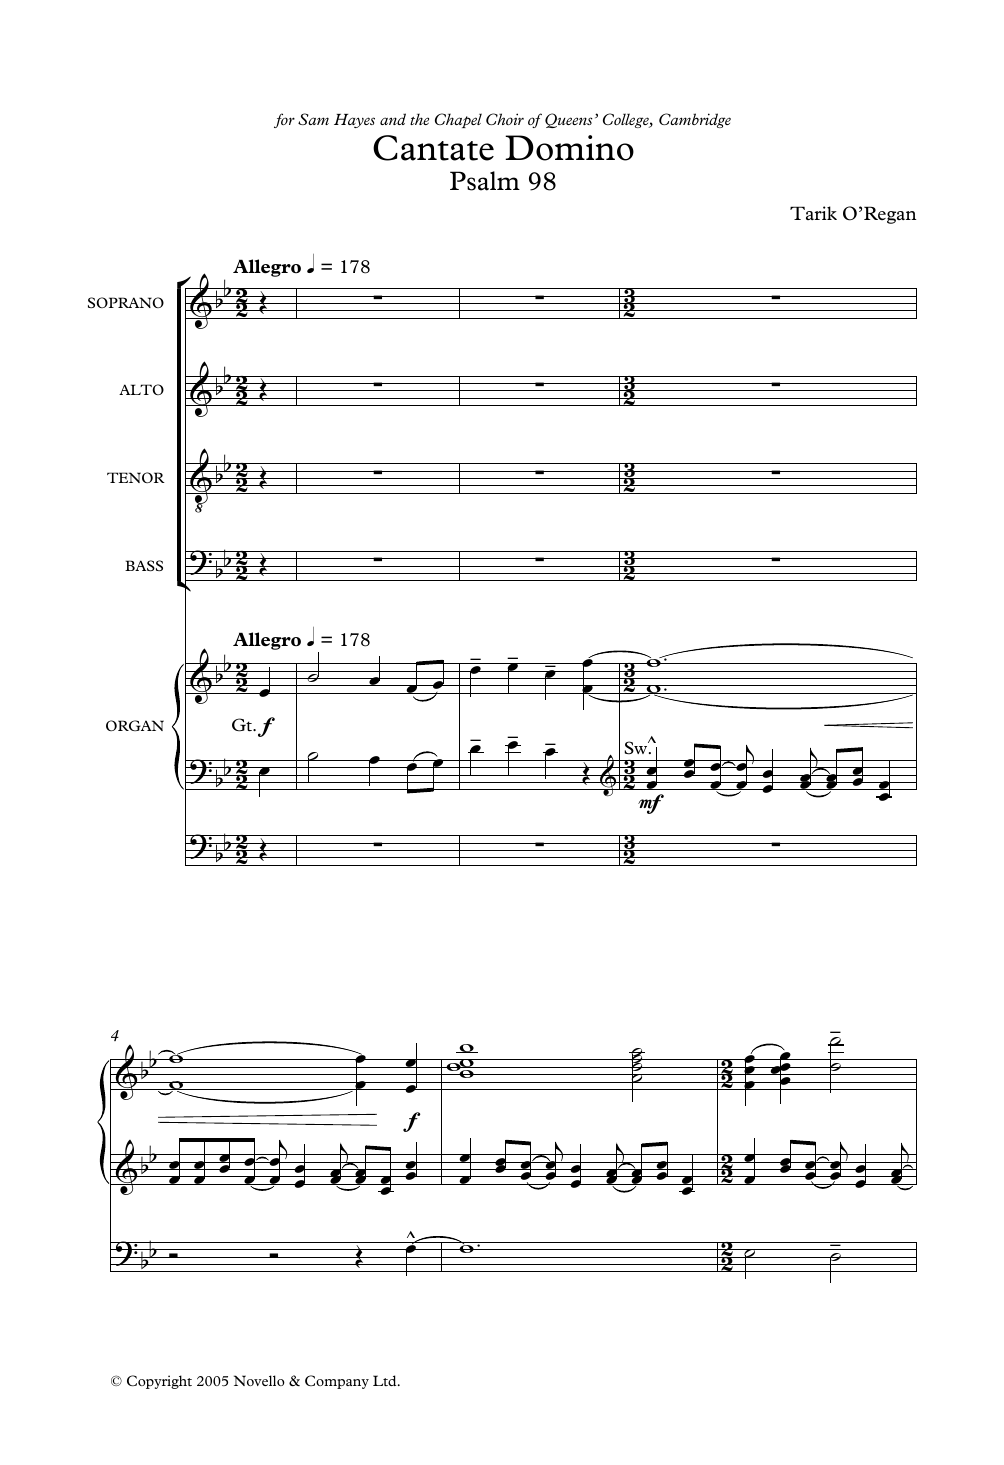 Download Tarik O'Regan Cantate Domino Sheet Music and learn how to play SATB Choir PDF digital score in minutes